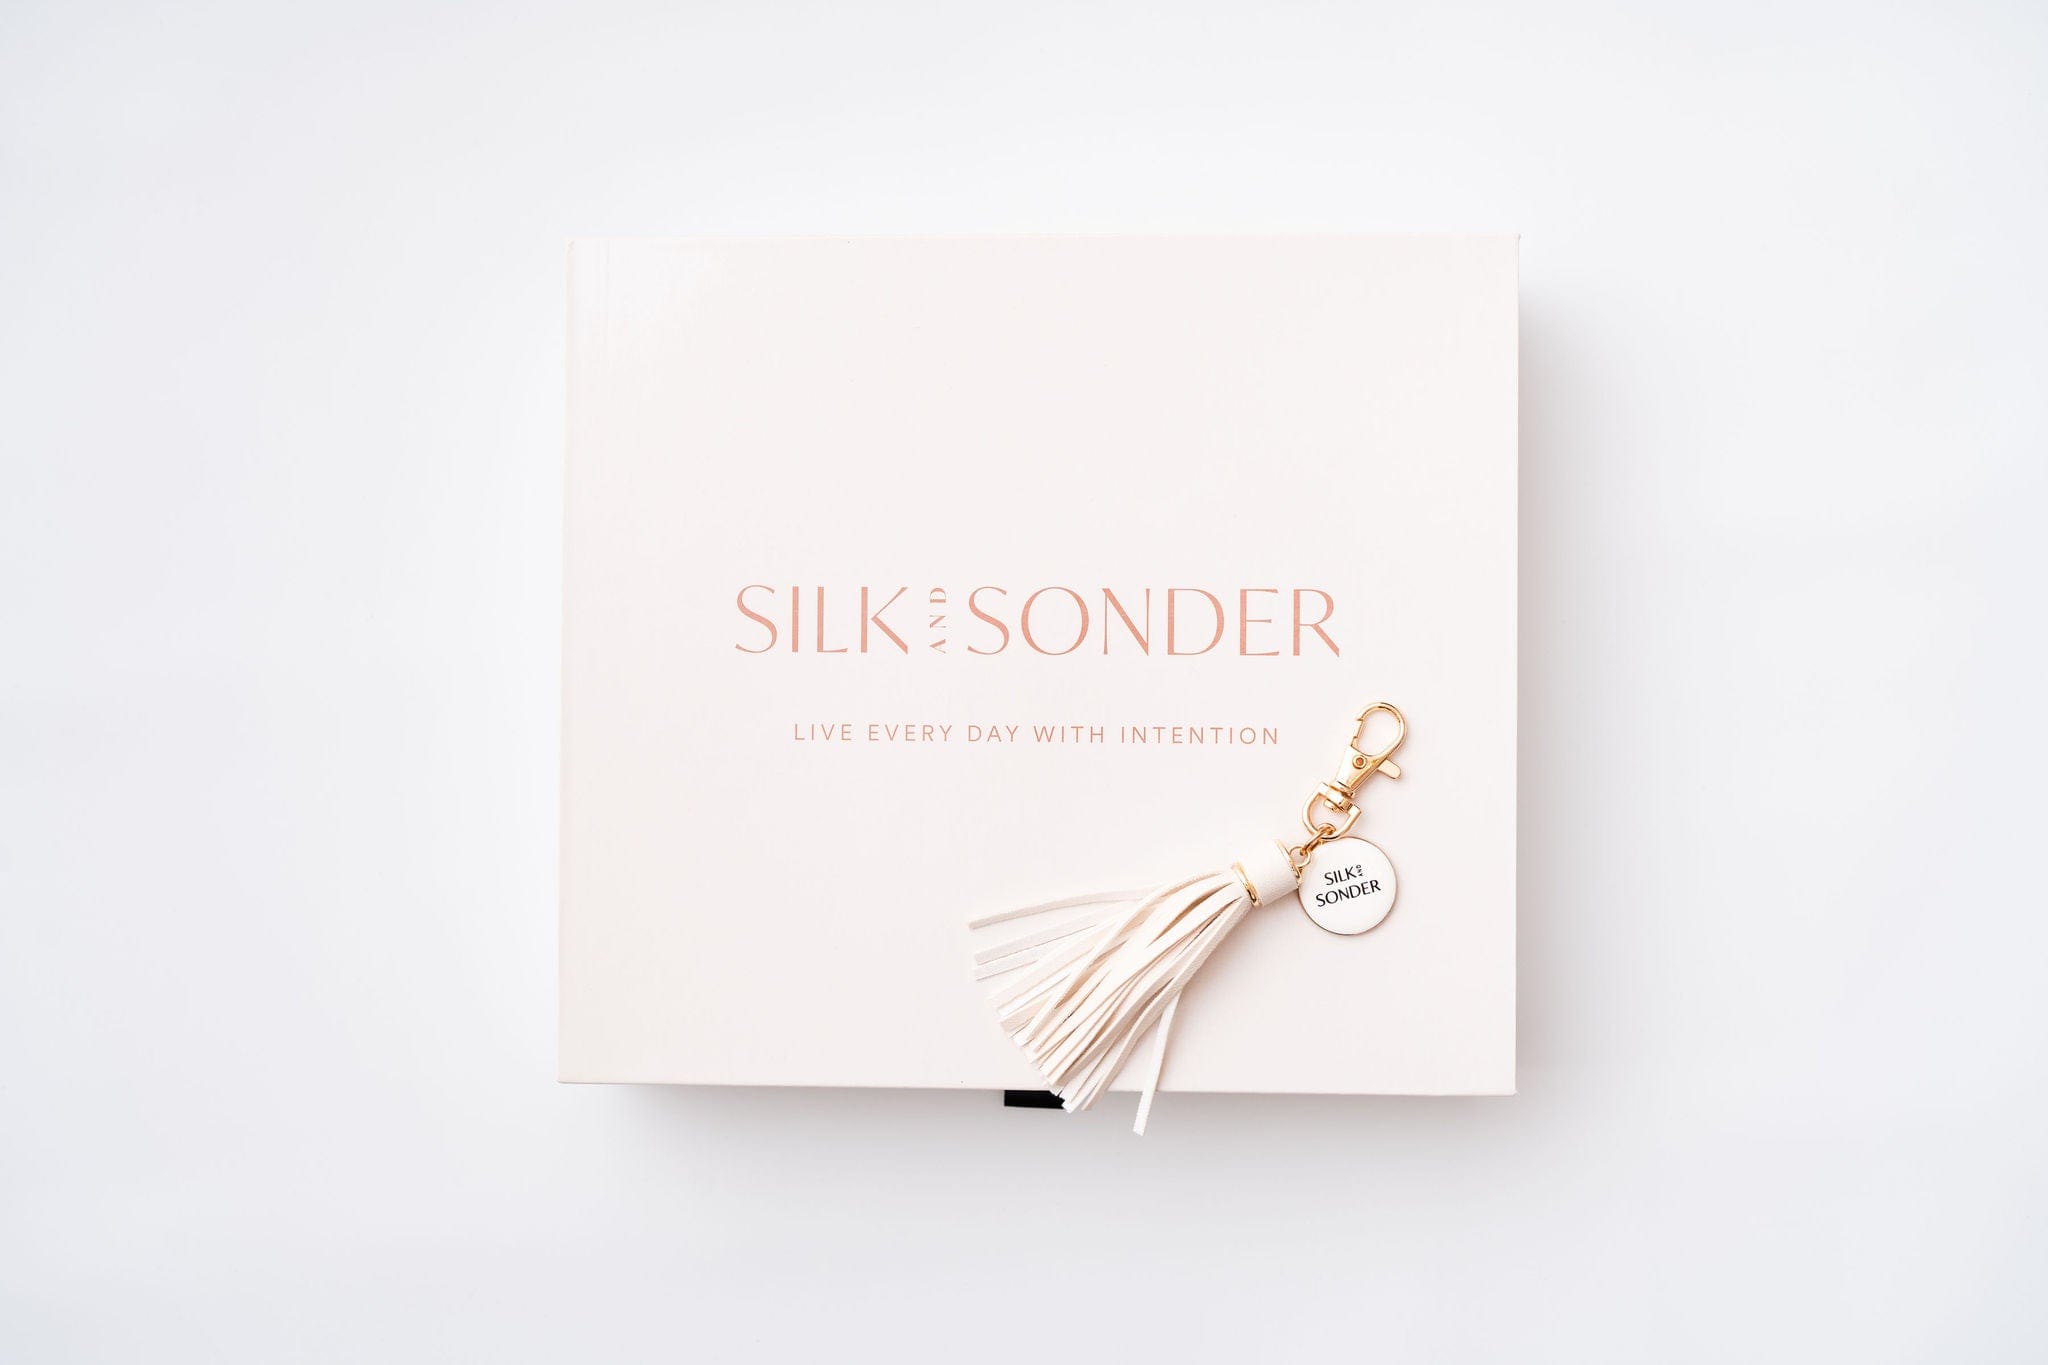 Silk + Sonder Journal Keepsake Box